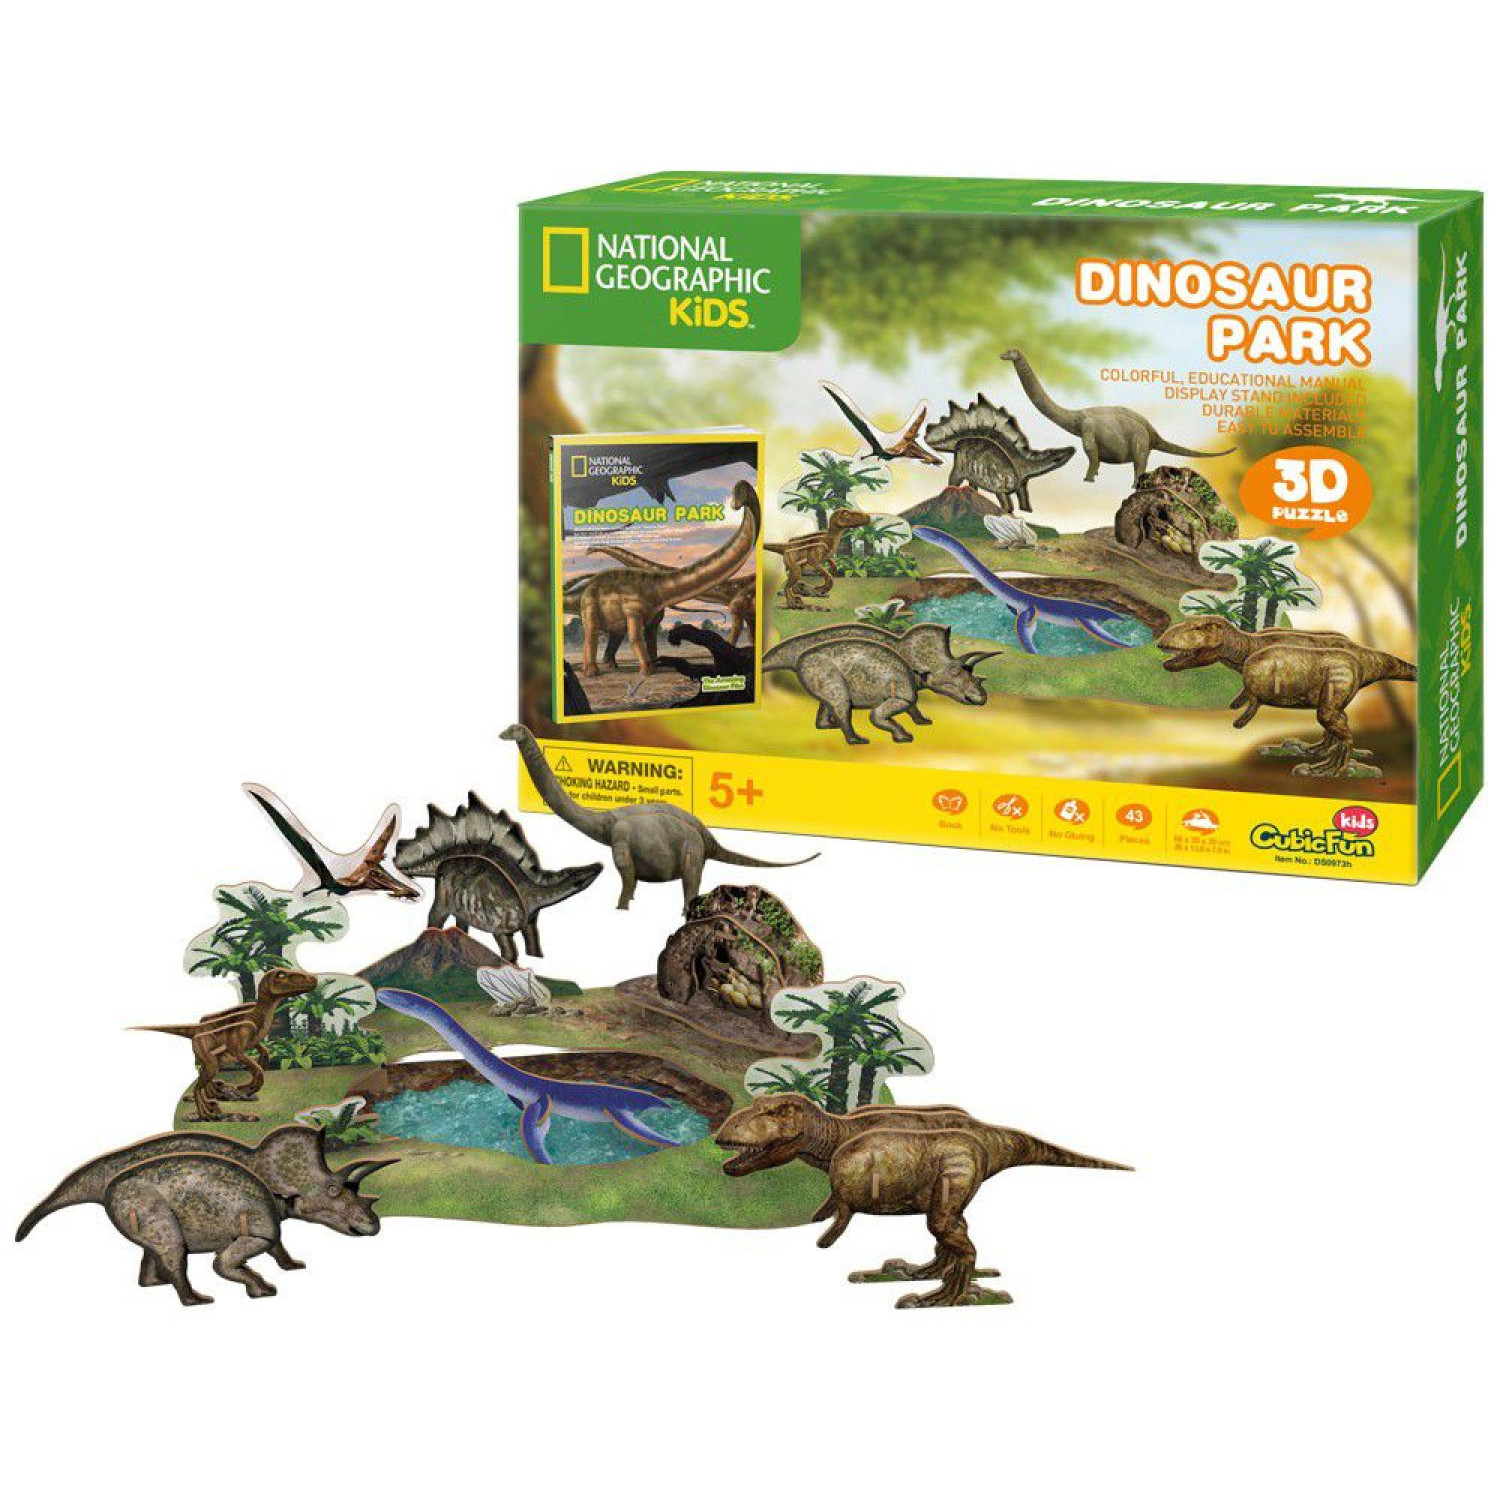 Пъзел Cubic Fun National Geographic Kids 3D Динозаври 43 елемента, DS0973h